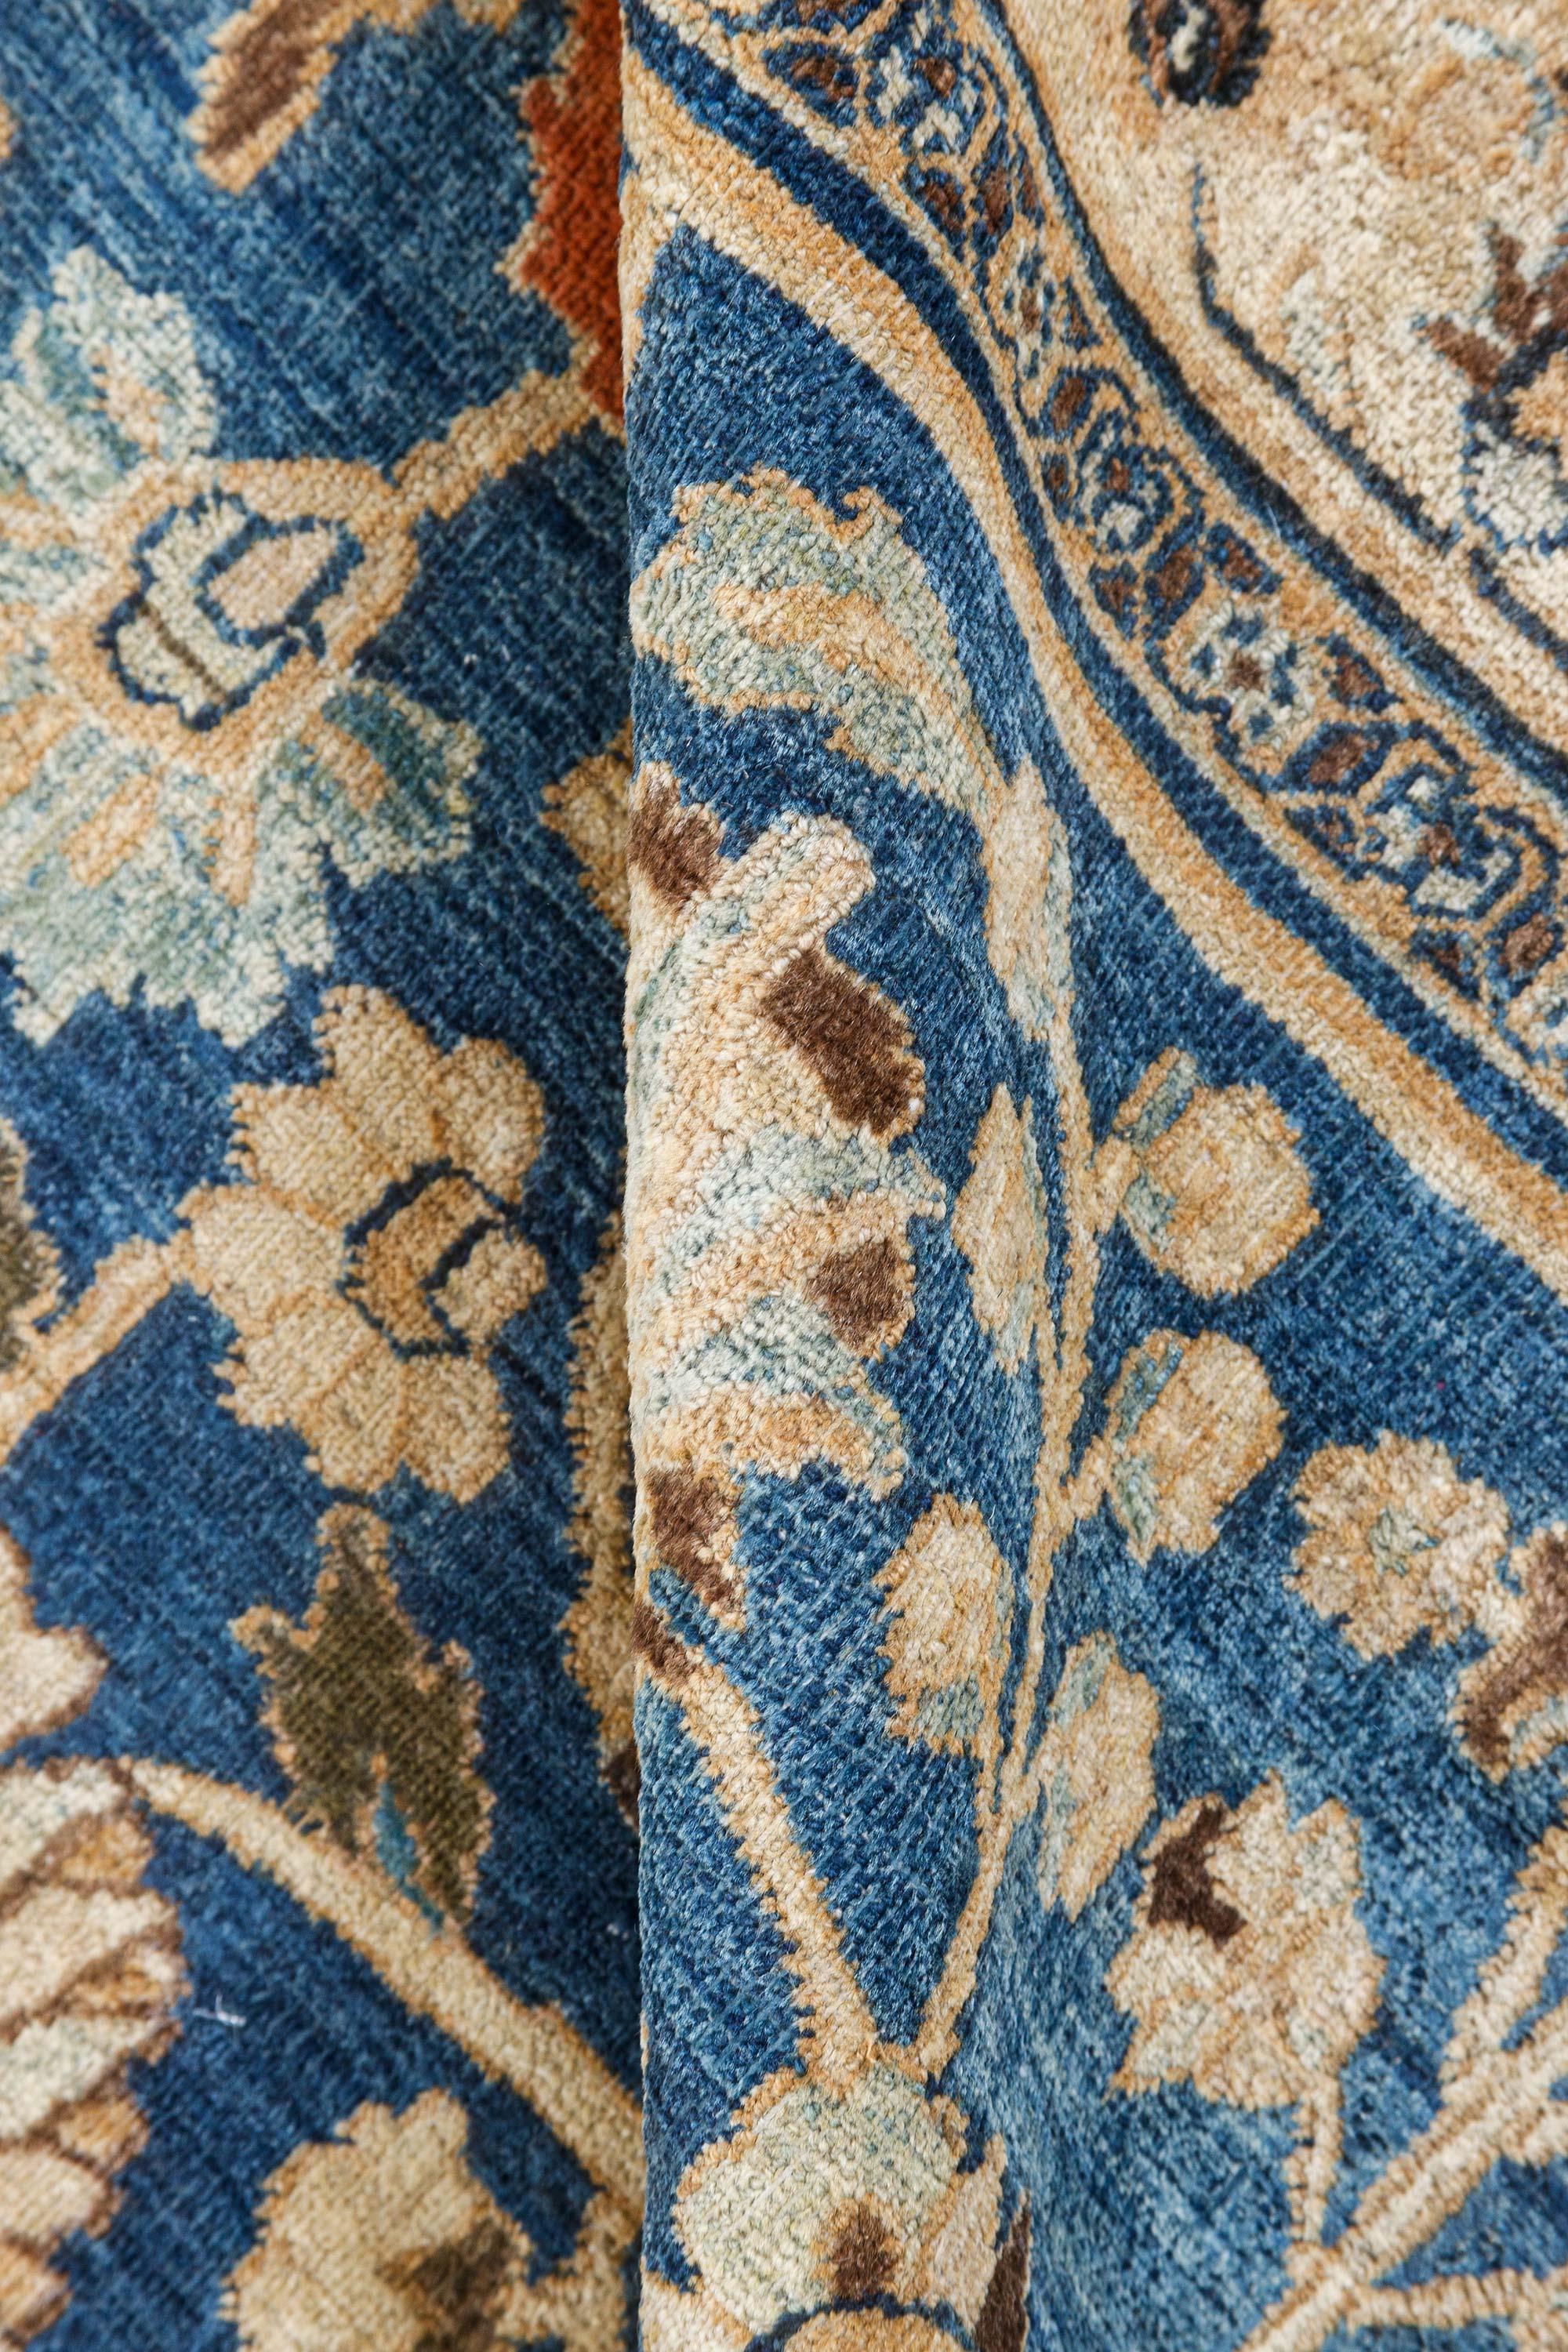 Early 20th century Persian Tabriz blue brown handmade wool carpet.
Size: 12'0